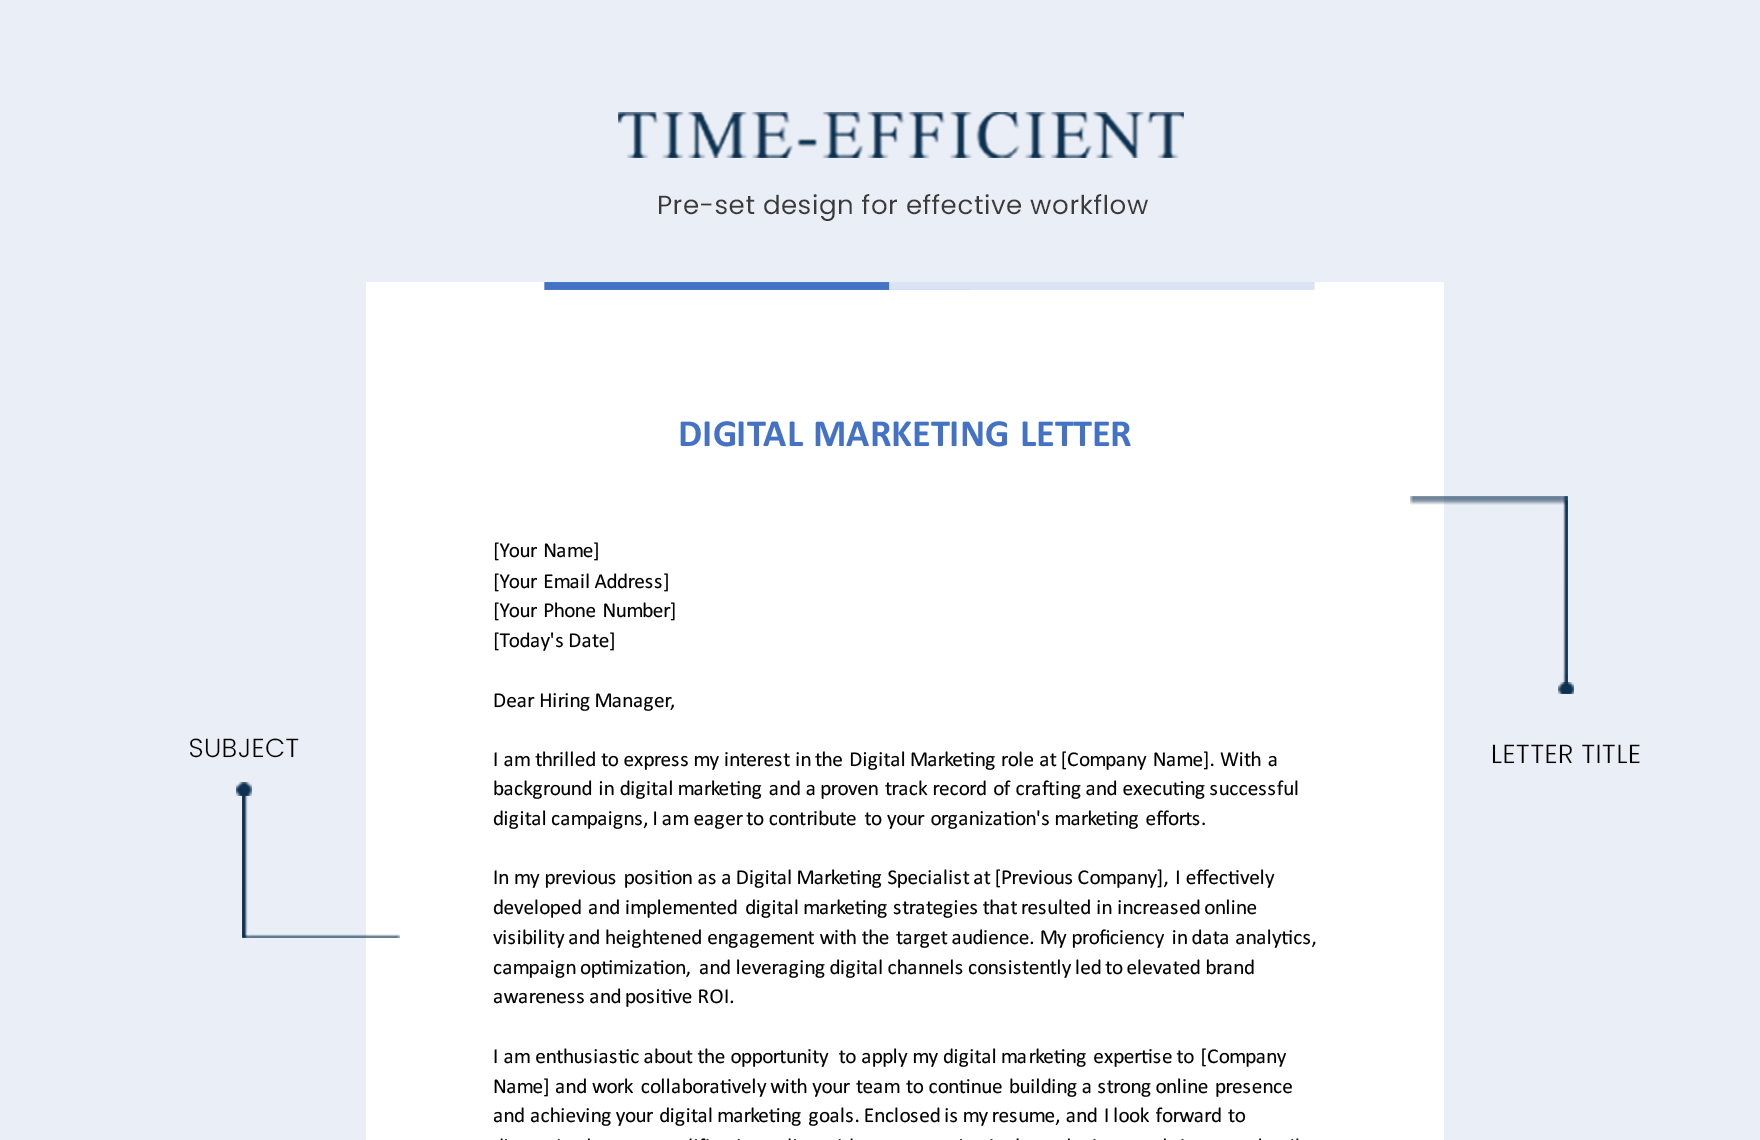  Digital Marketing Letter